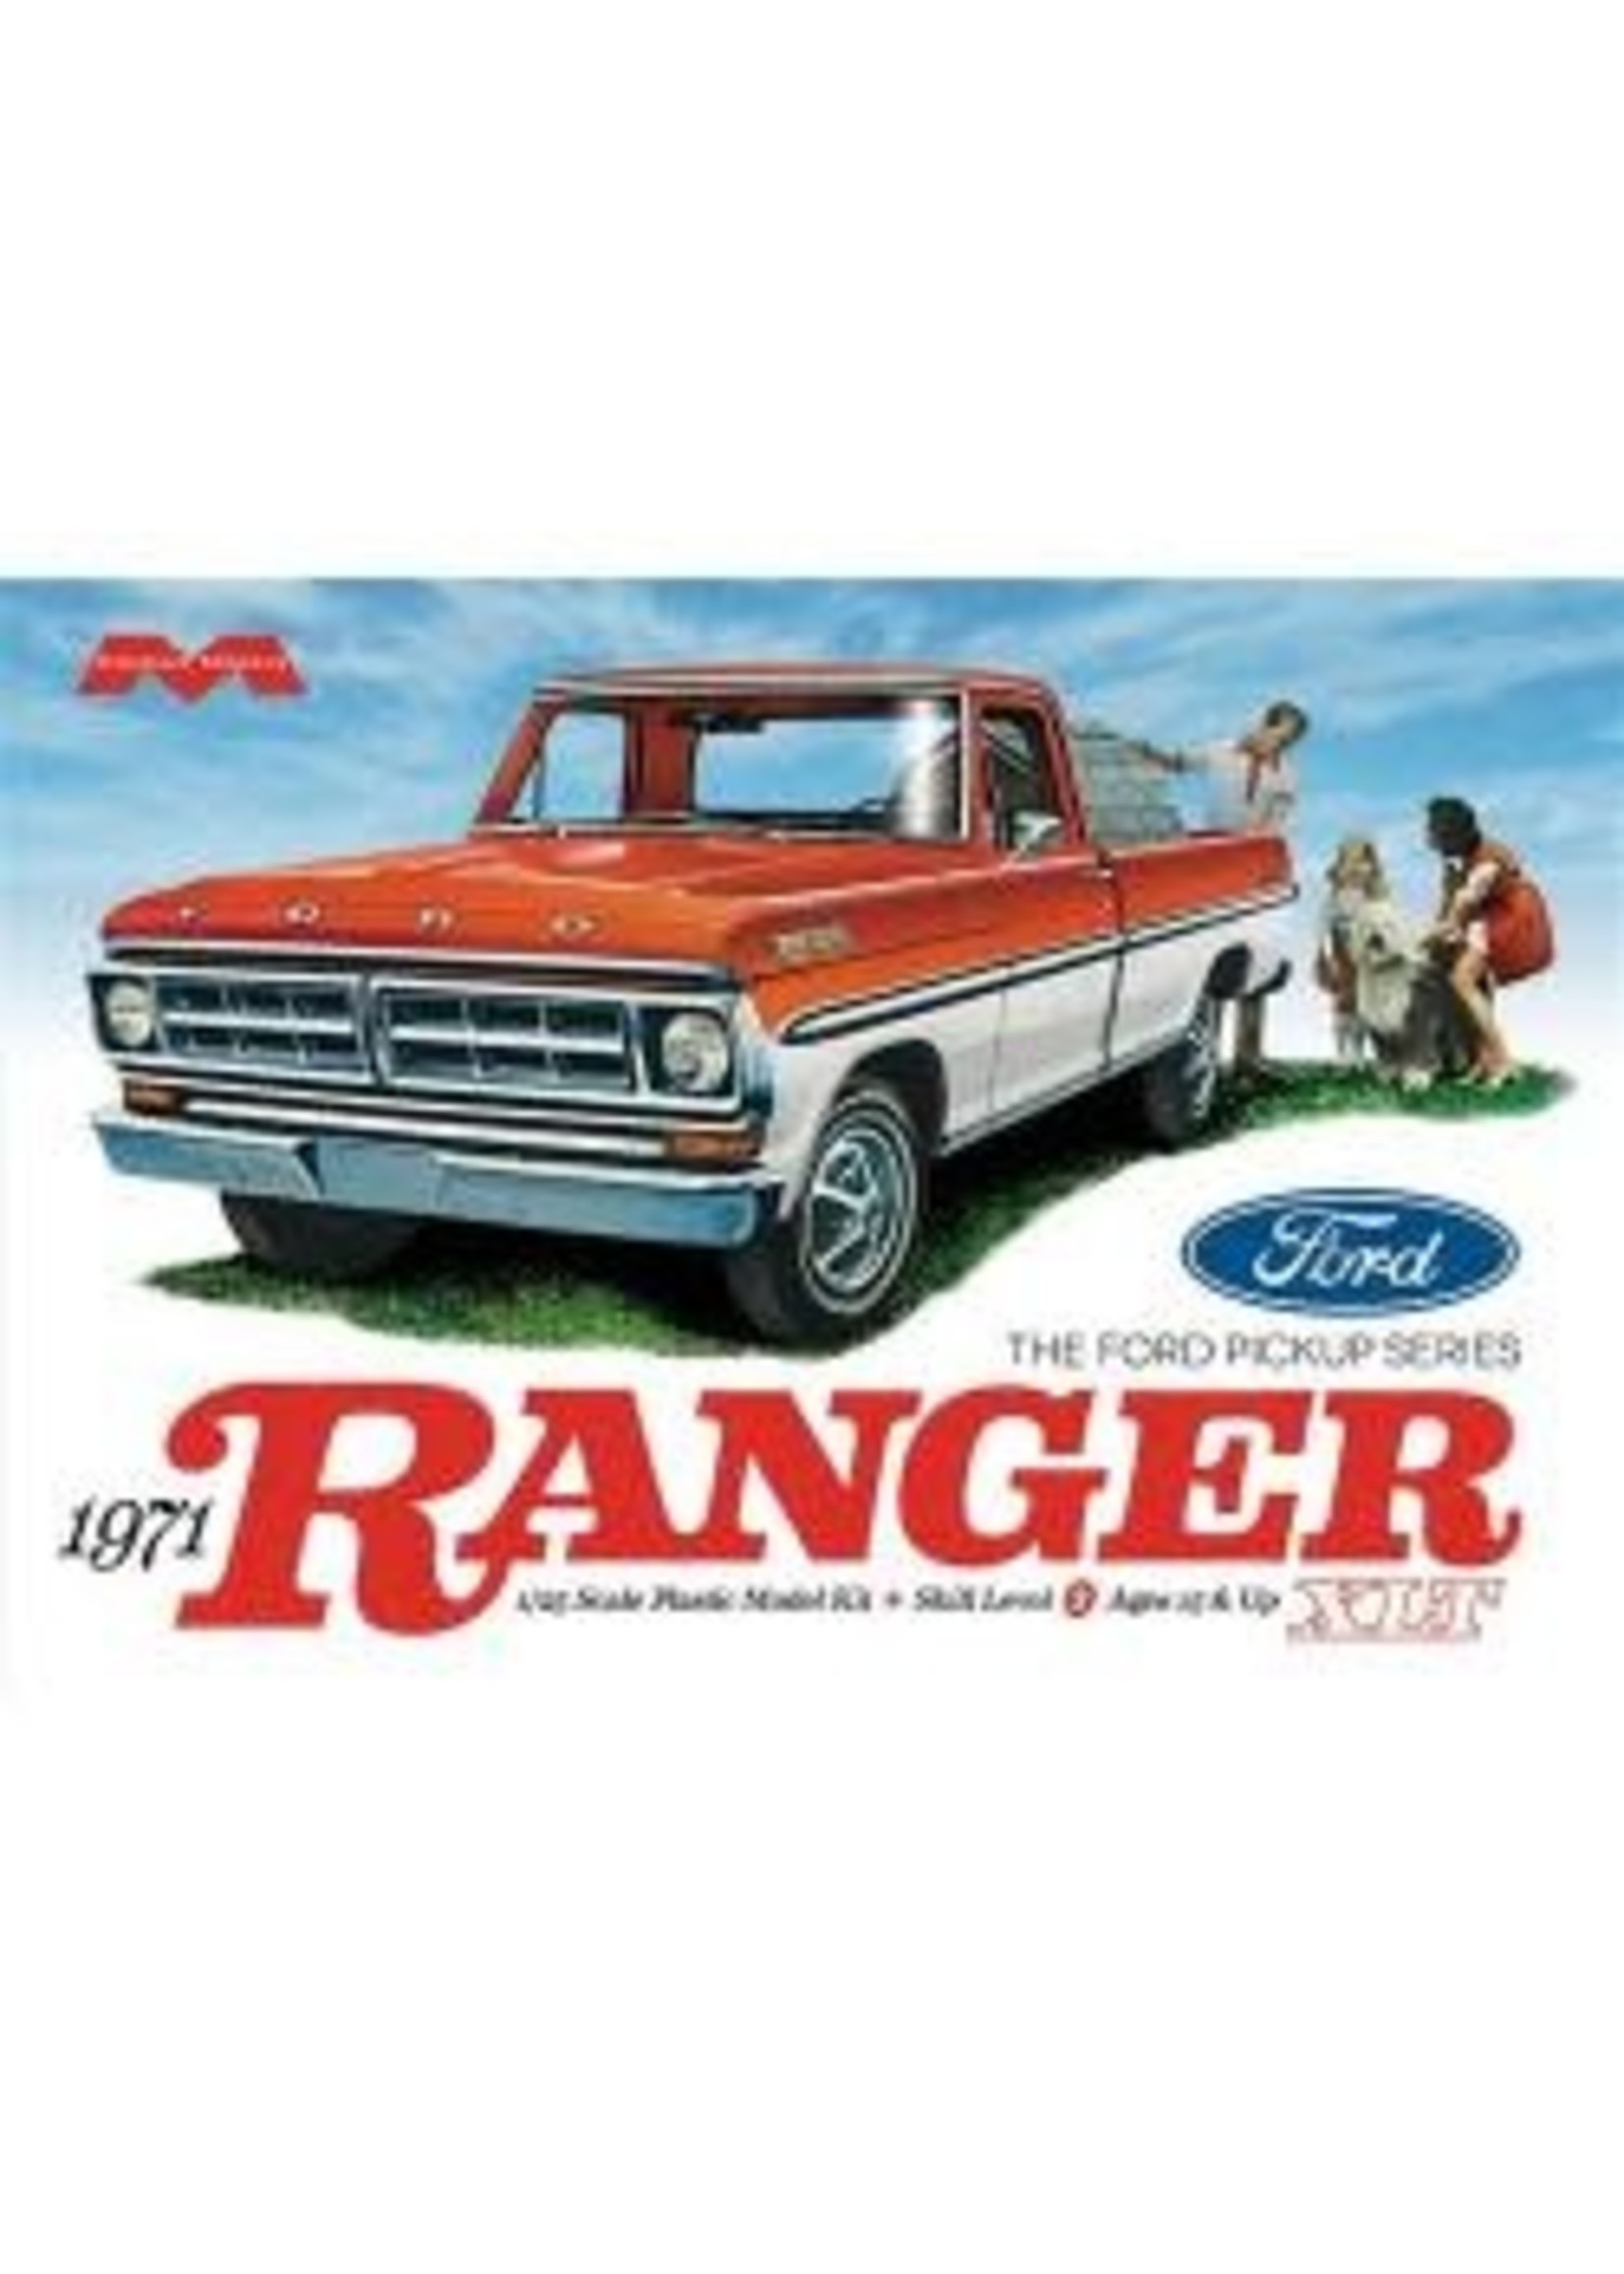 Moebius 1971 Ranger - The Ford pickup series (1:25)